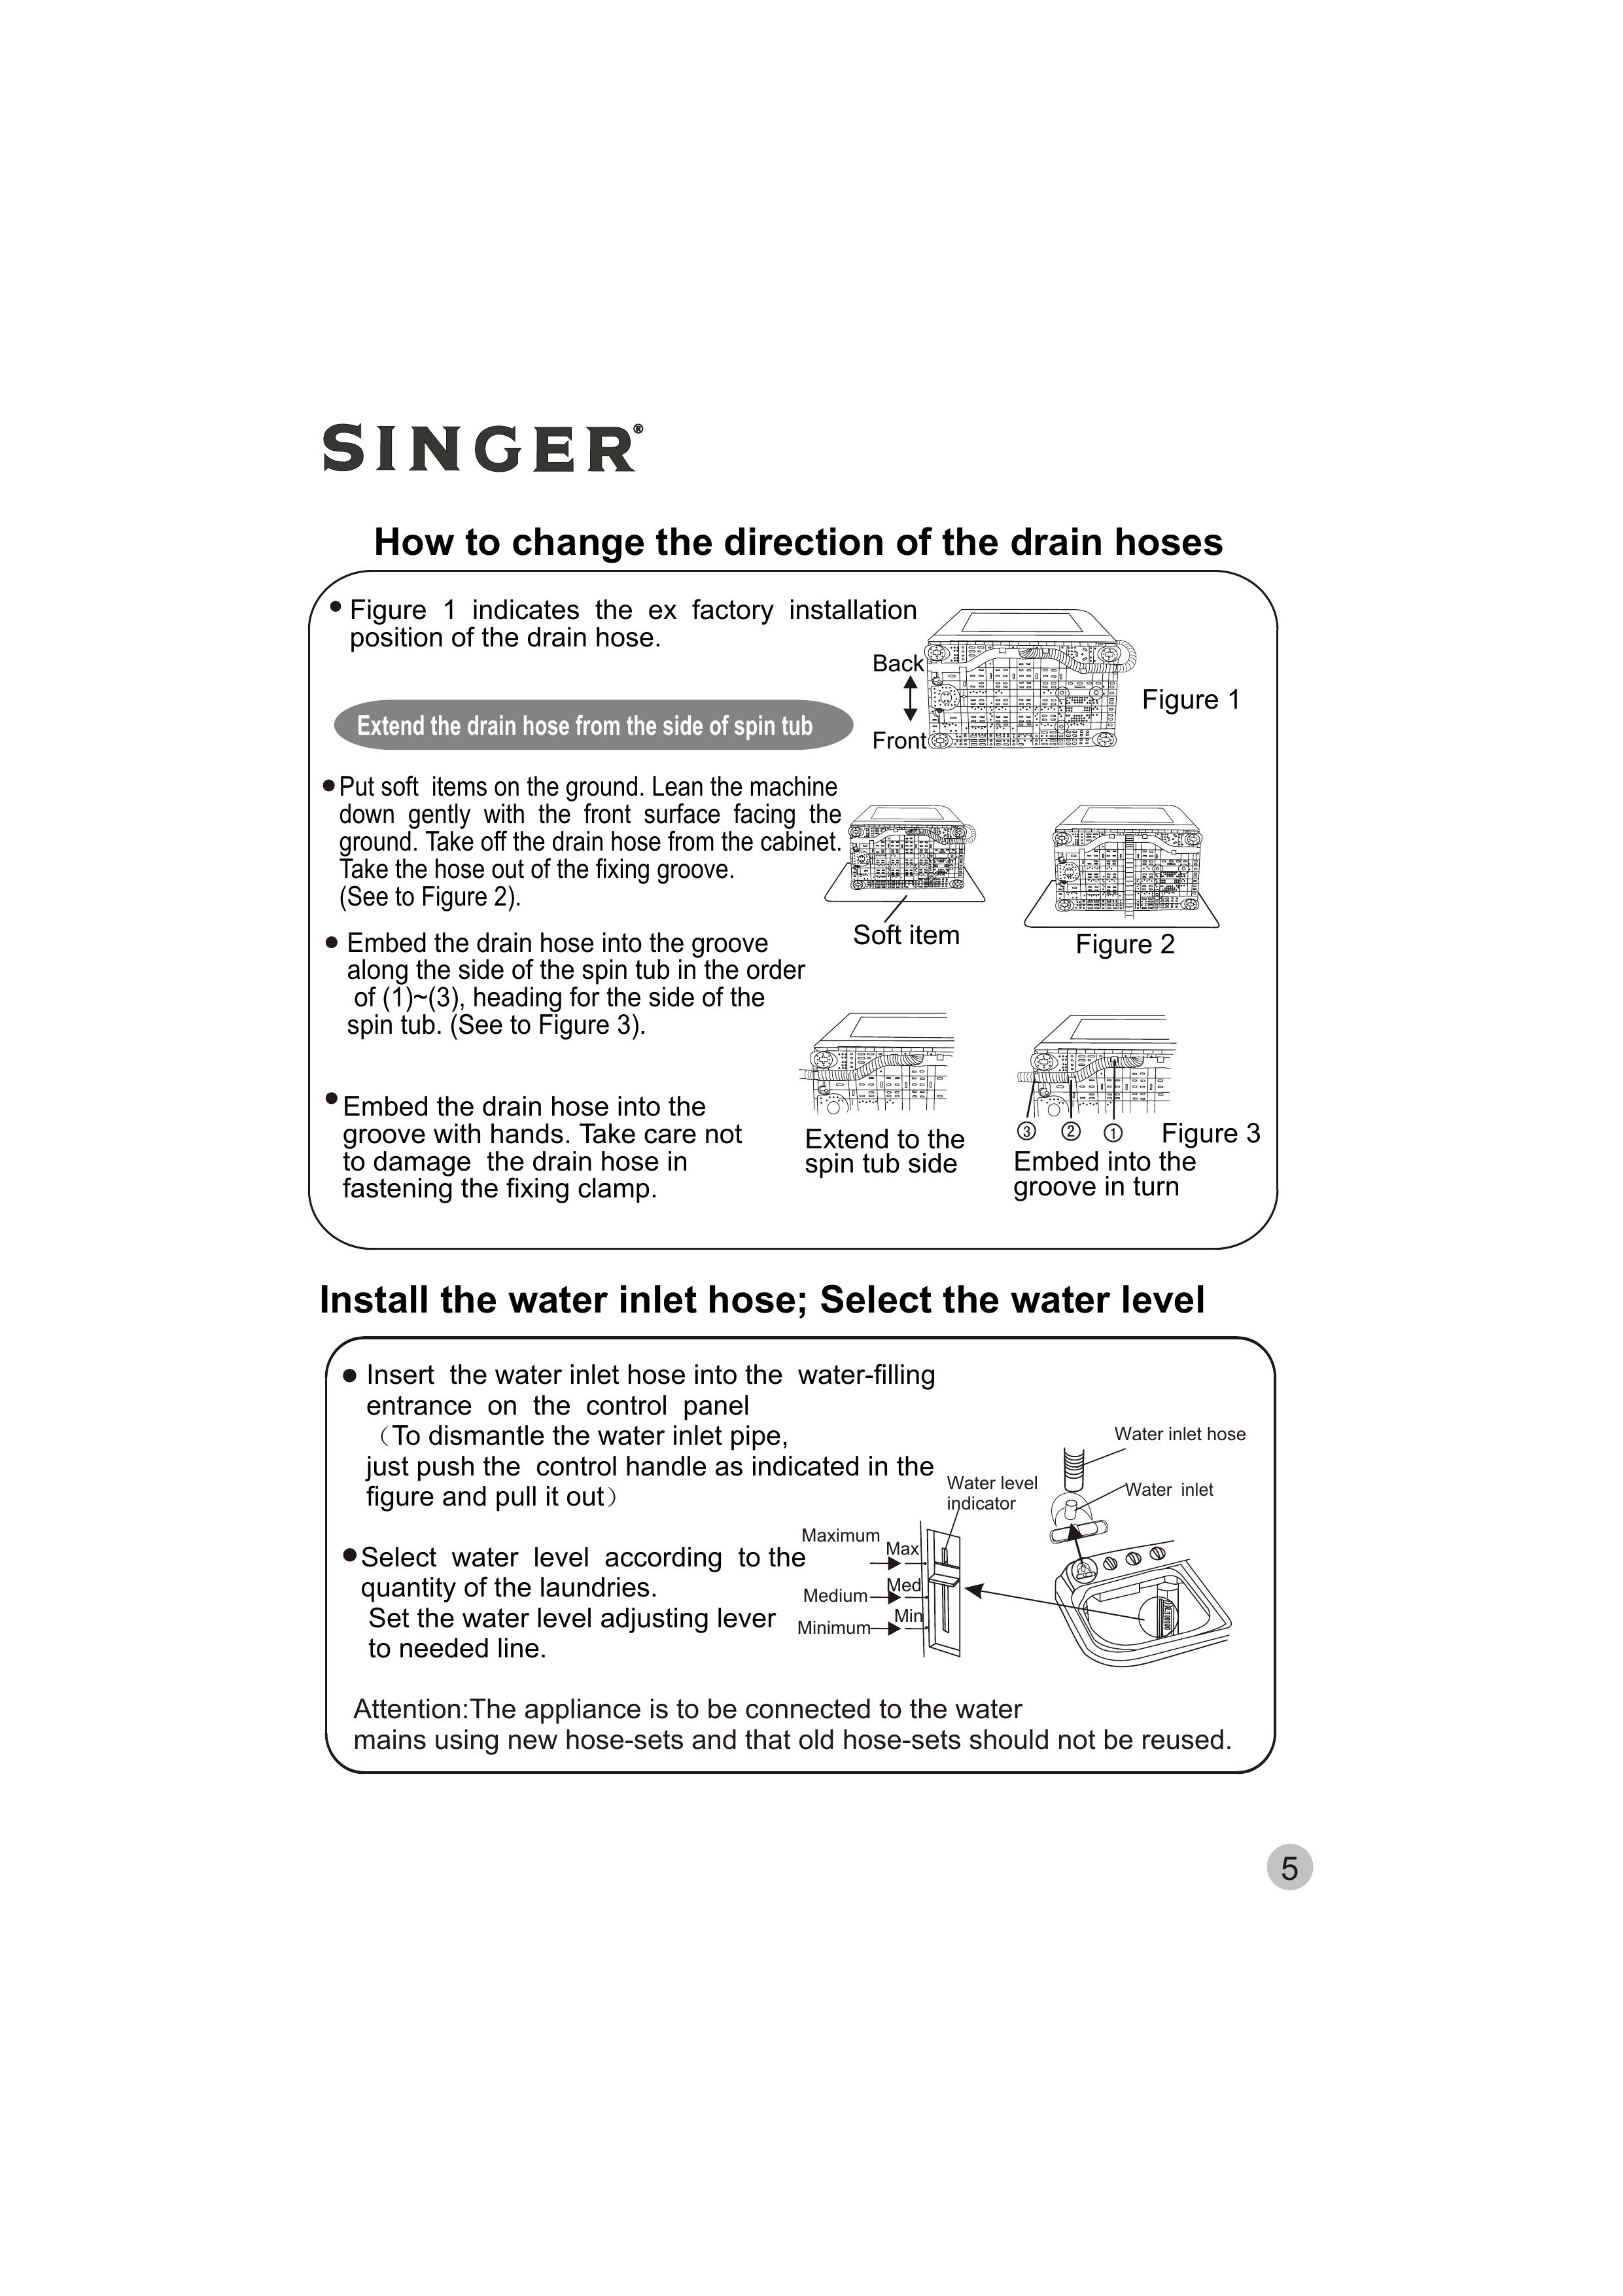 Singer WT5113 Washer/Dryer User Manual (Page 6)